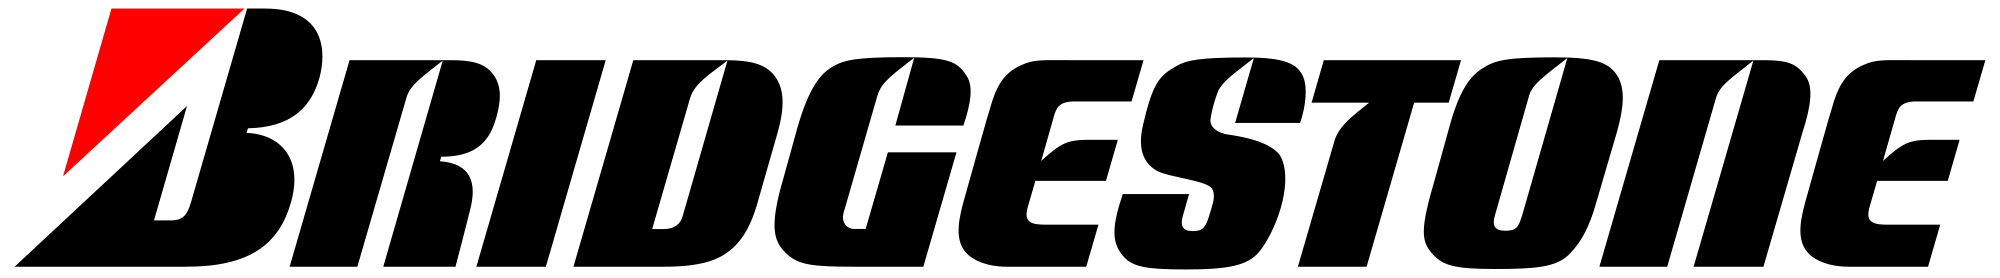 Logo - Bridgestone.png